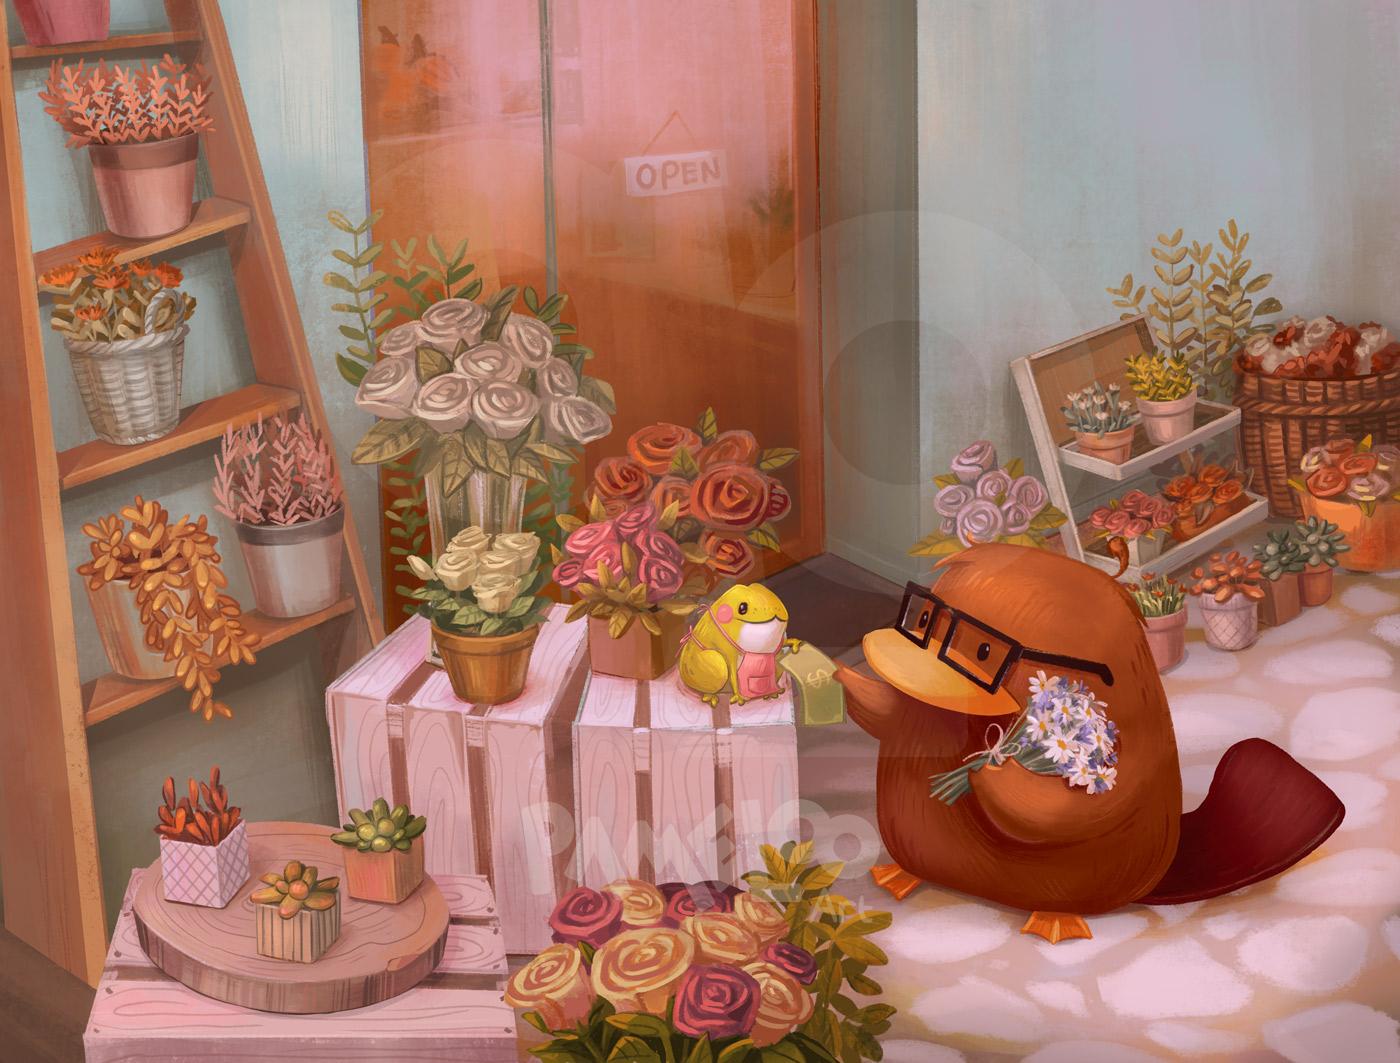 Flower Shop